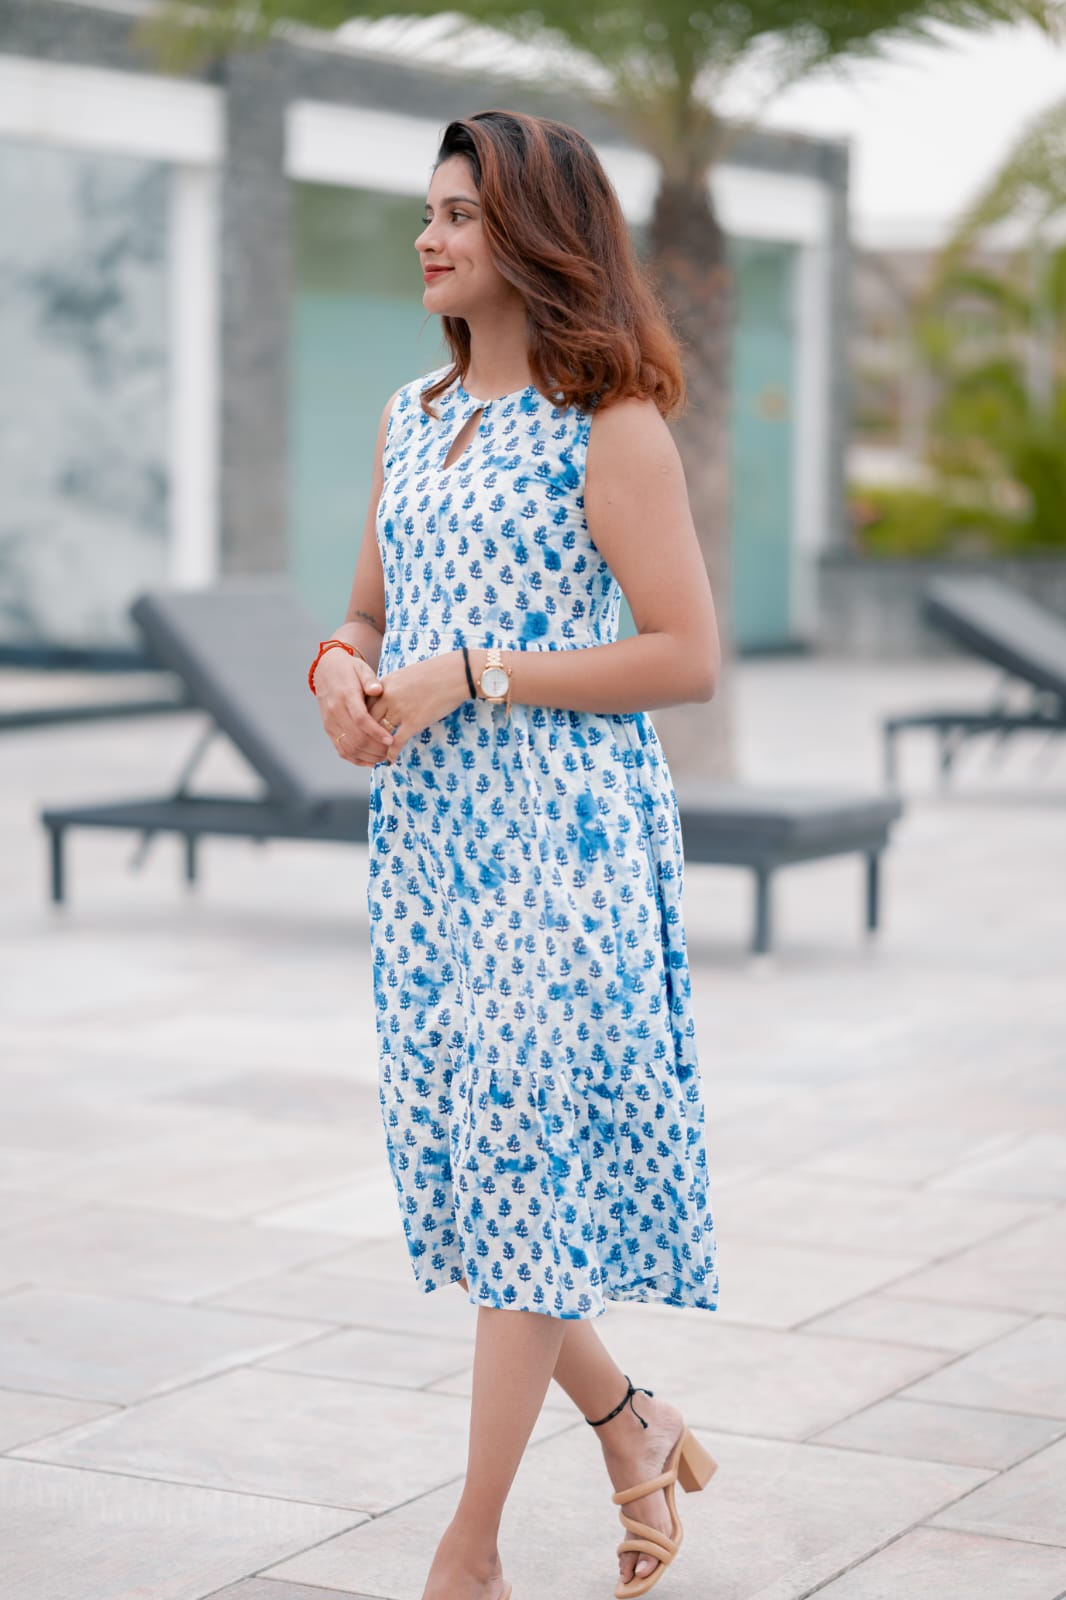 Dress 1 - Floral handblock printed cotton dress in indigo